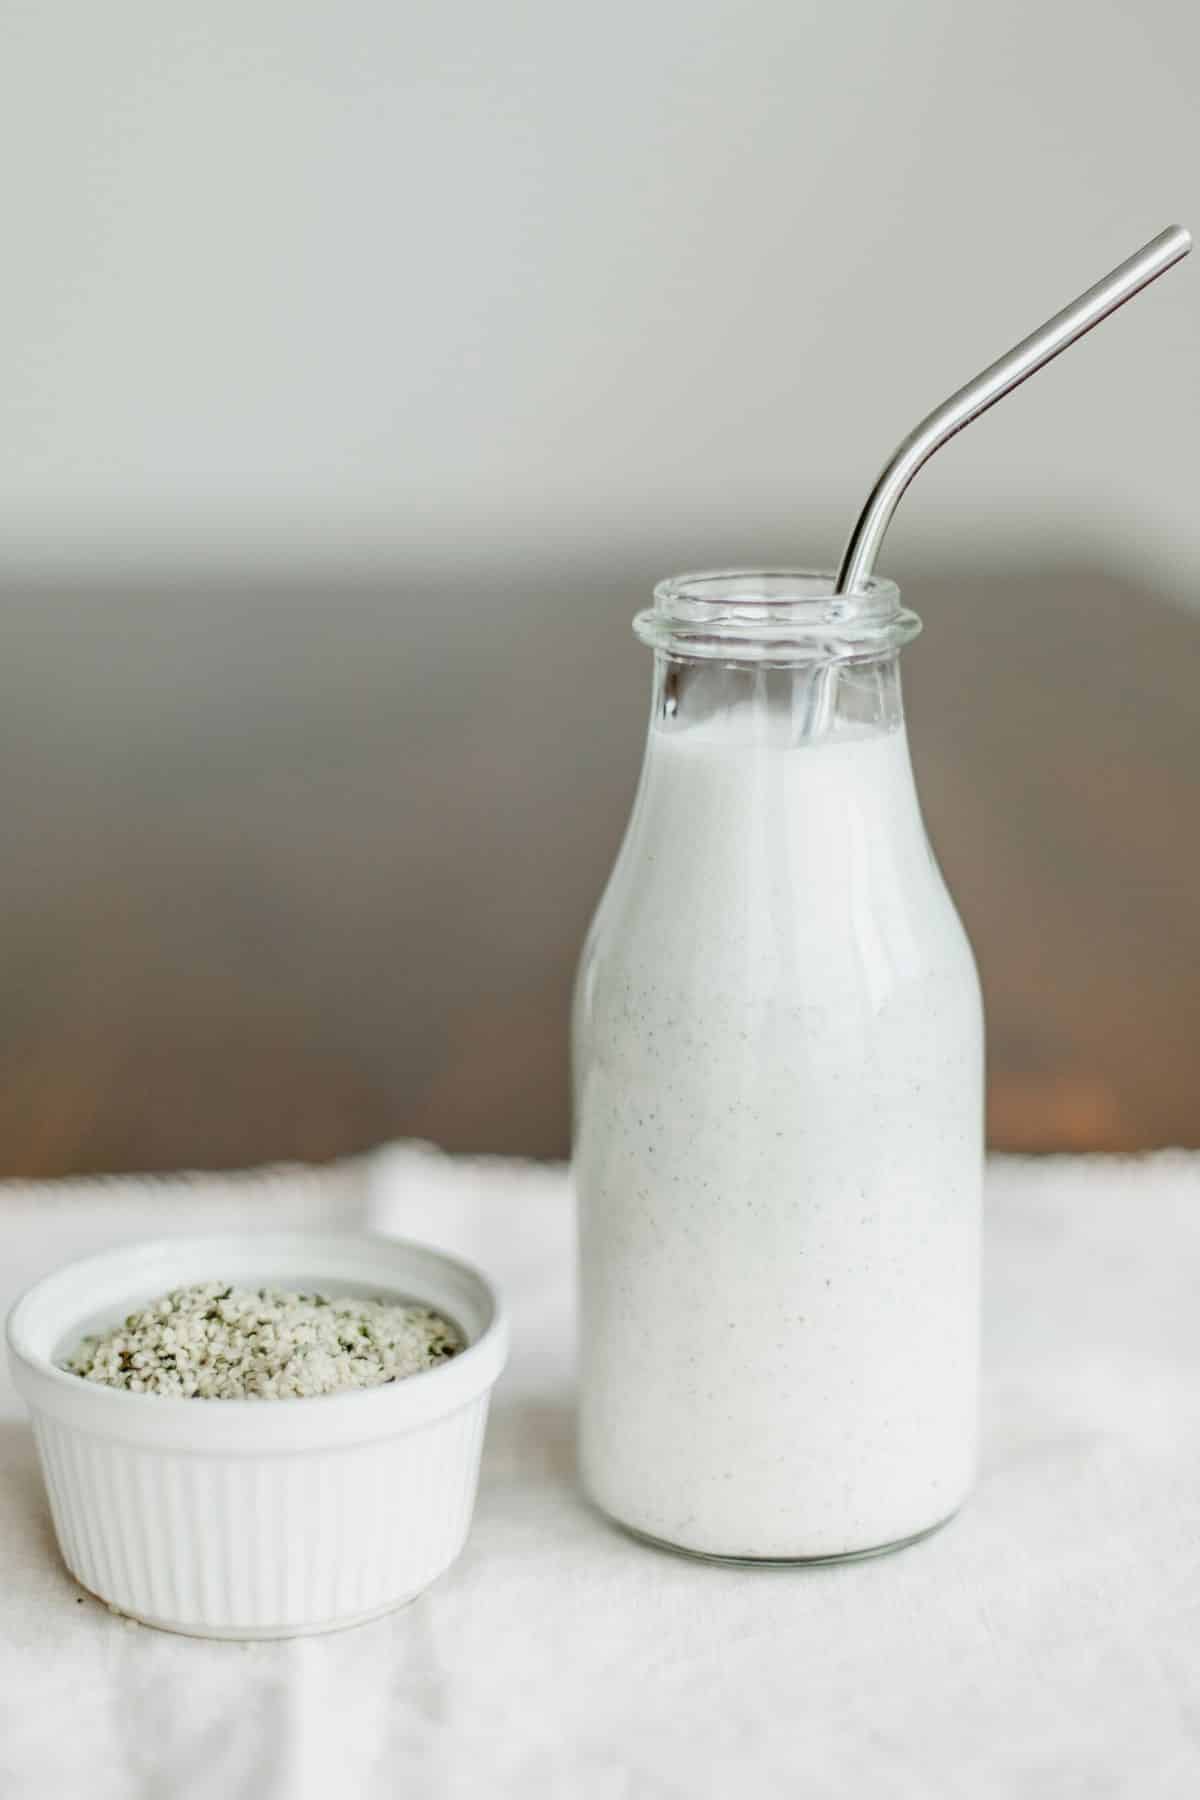 vanilla hemp milk in tall jar with stainless steel straw.